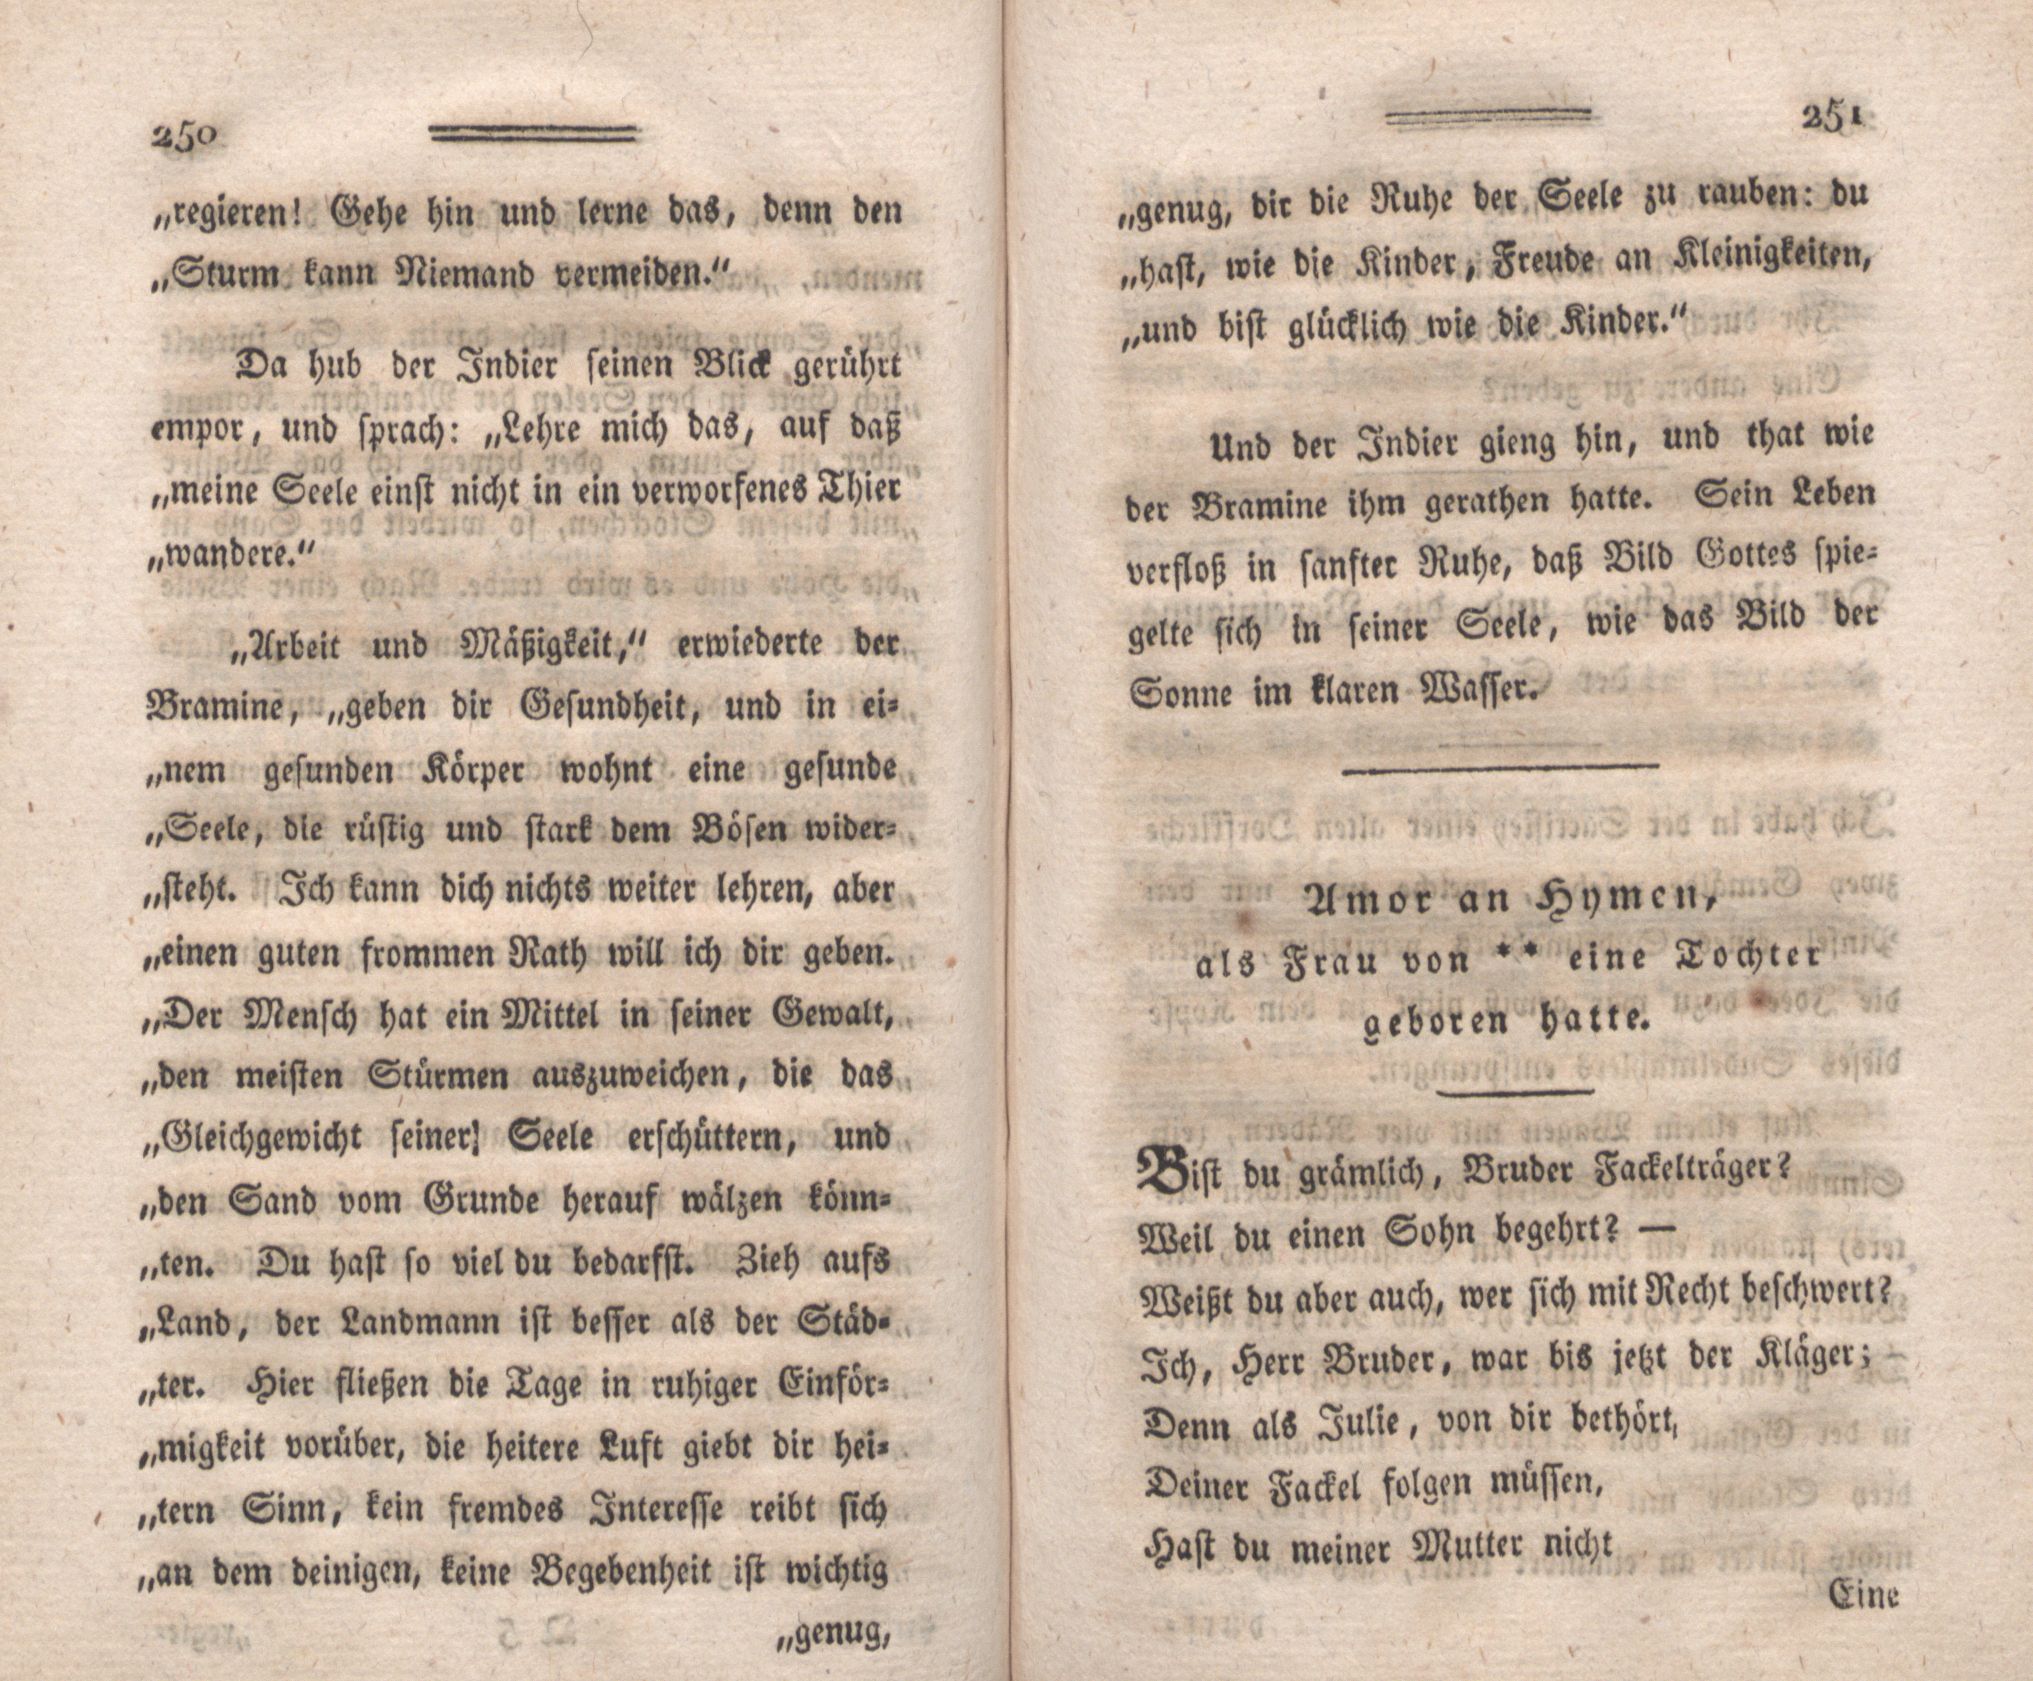 Amor an Hymen (1794) | 1. (250-251) Main body of text